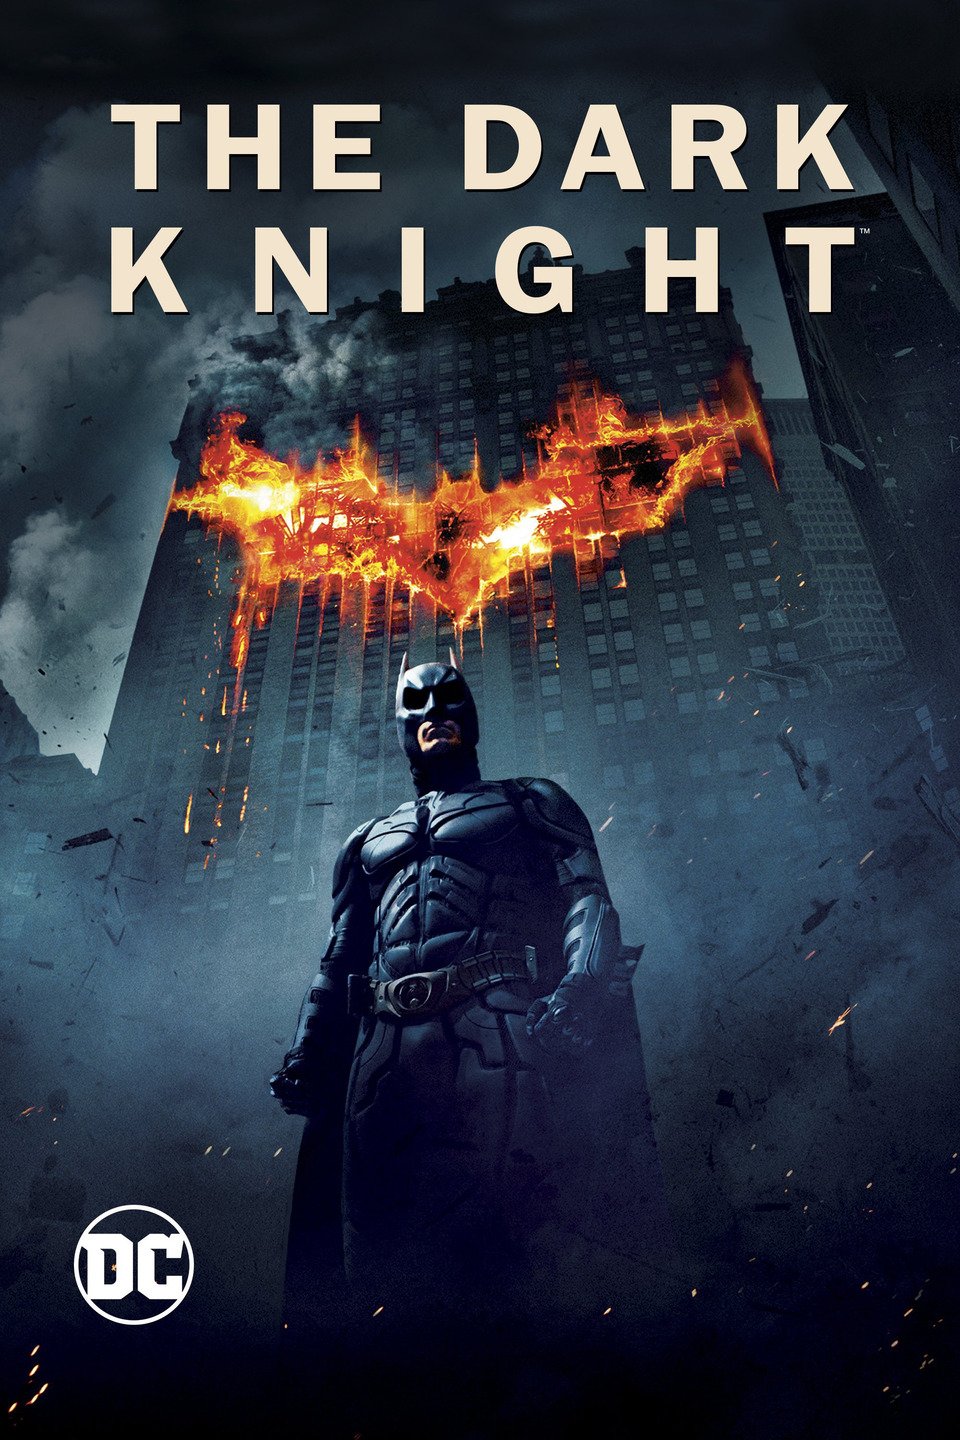 51 Top Photos The Dark Knight Full Movie Free - REEL POPCORN TALK: July 2012